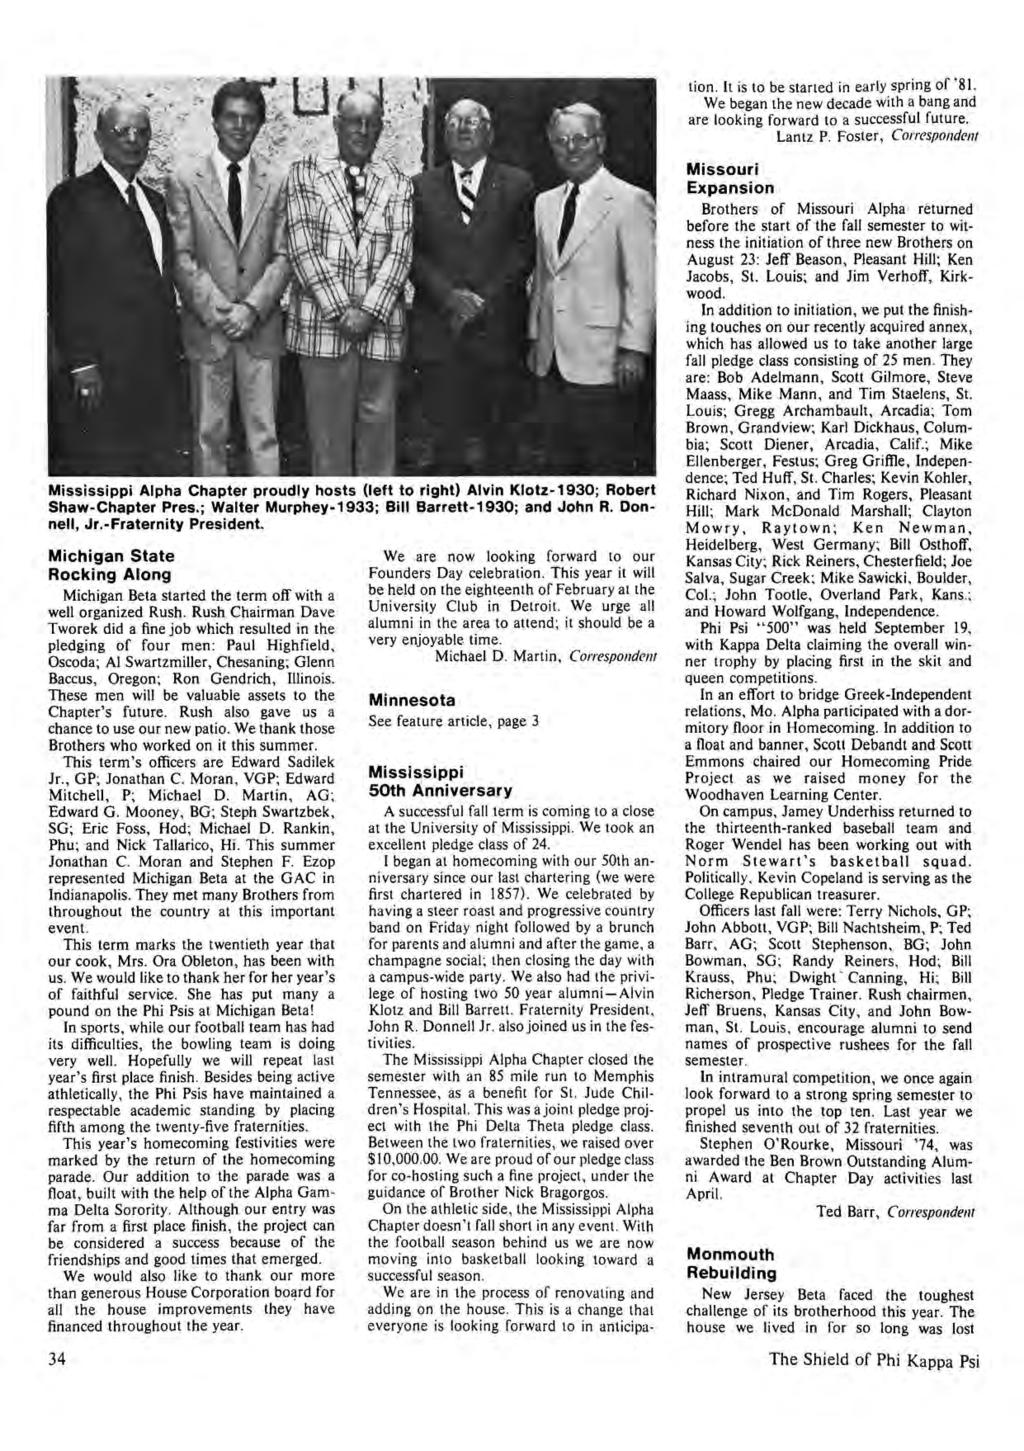 Mississippi Alpha Chapter proudly hosts (left to right) Alvin Klotz-1930; Robert Shaw-Chapter Pres.; Walter Murphey-1933; Bill Barrett-1930; and John R. Donnell, Jr.-Fraternity President.